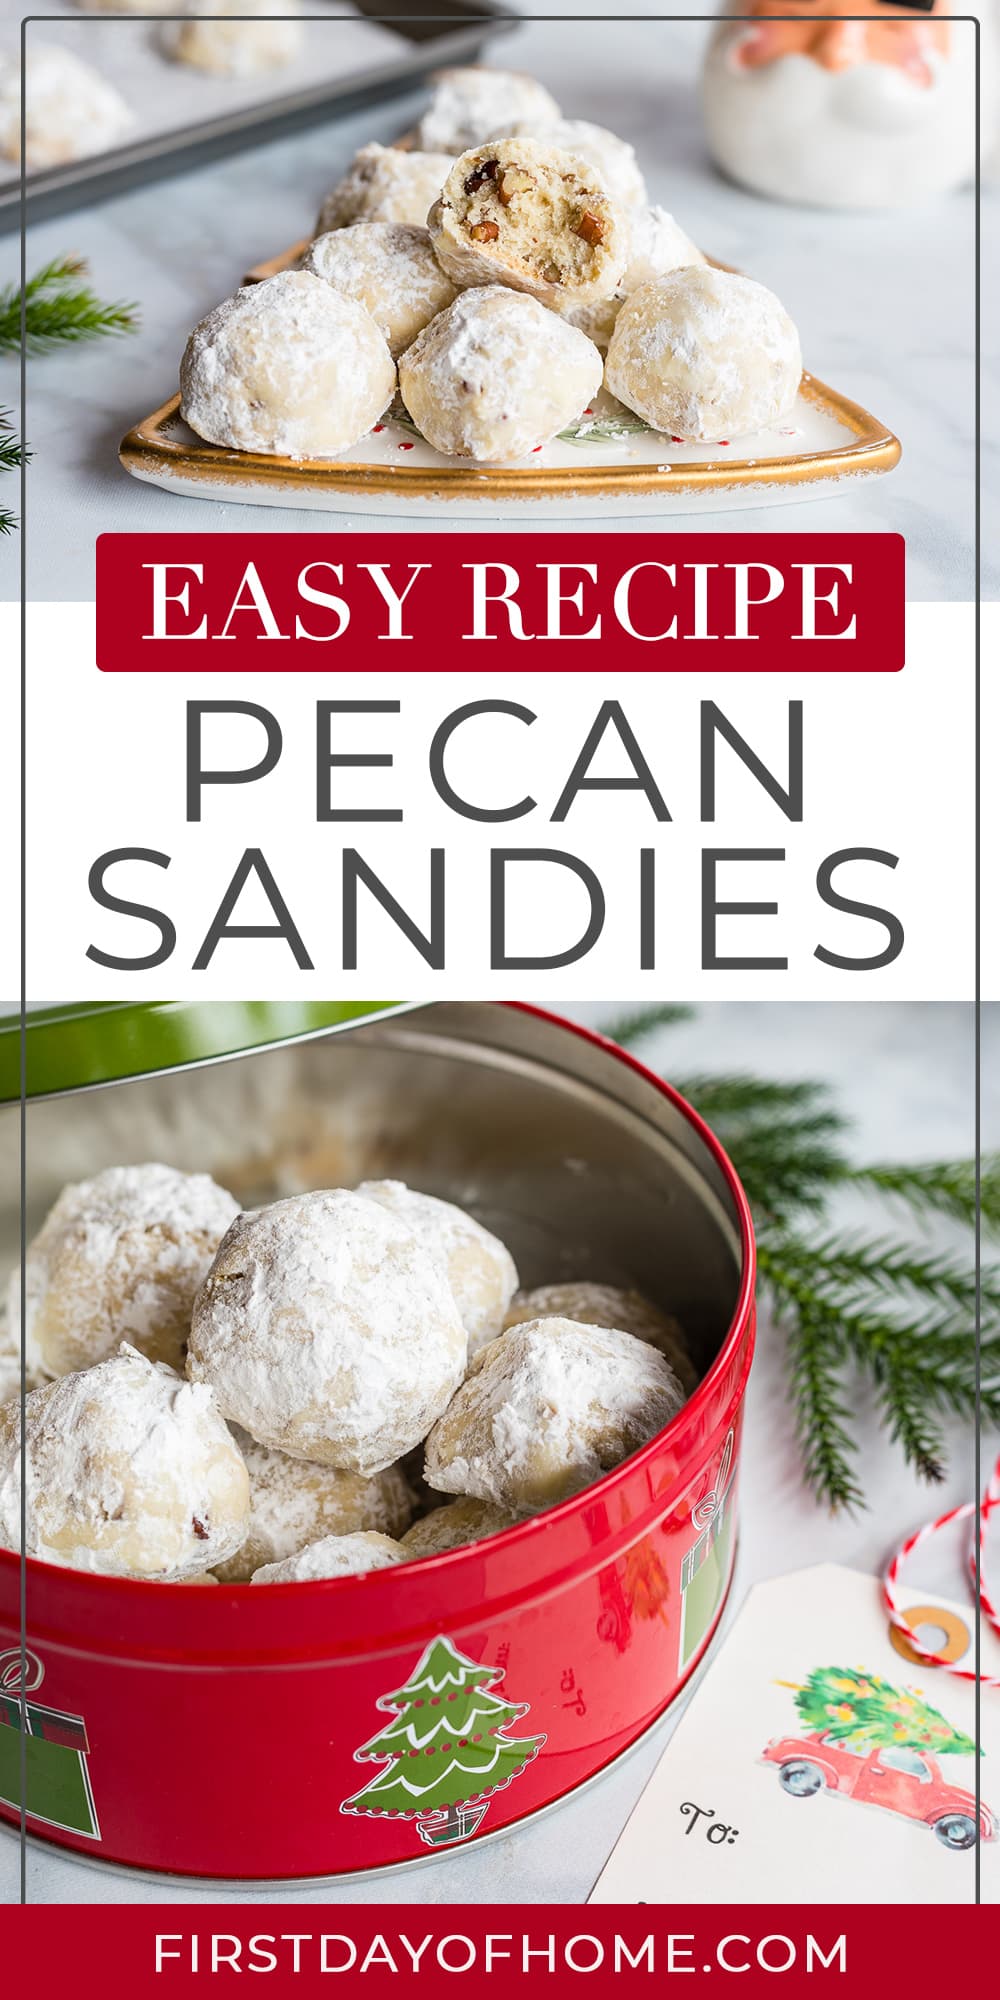 Pecan sandies in Christmas tin with stack of pecan sandies shown with one cookie eaten. Text overlay reads "Easy Recipe Pecan Sandies"